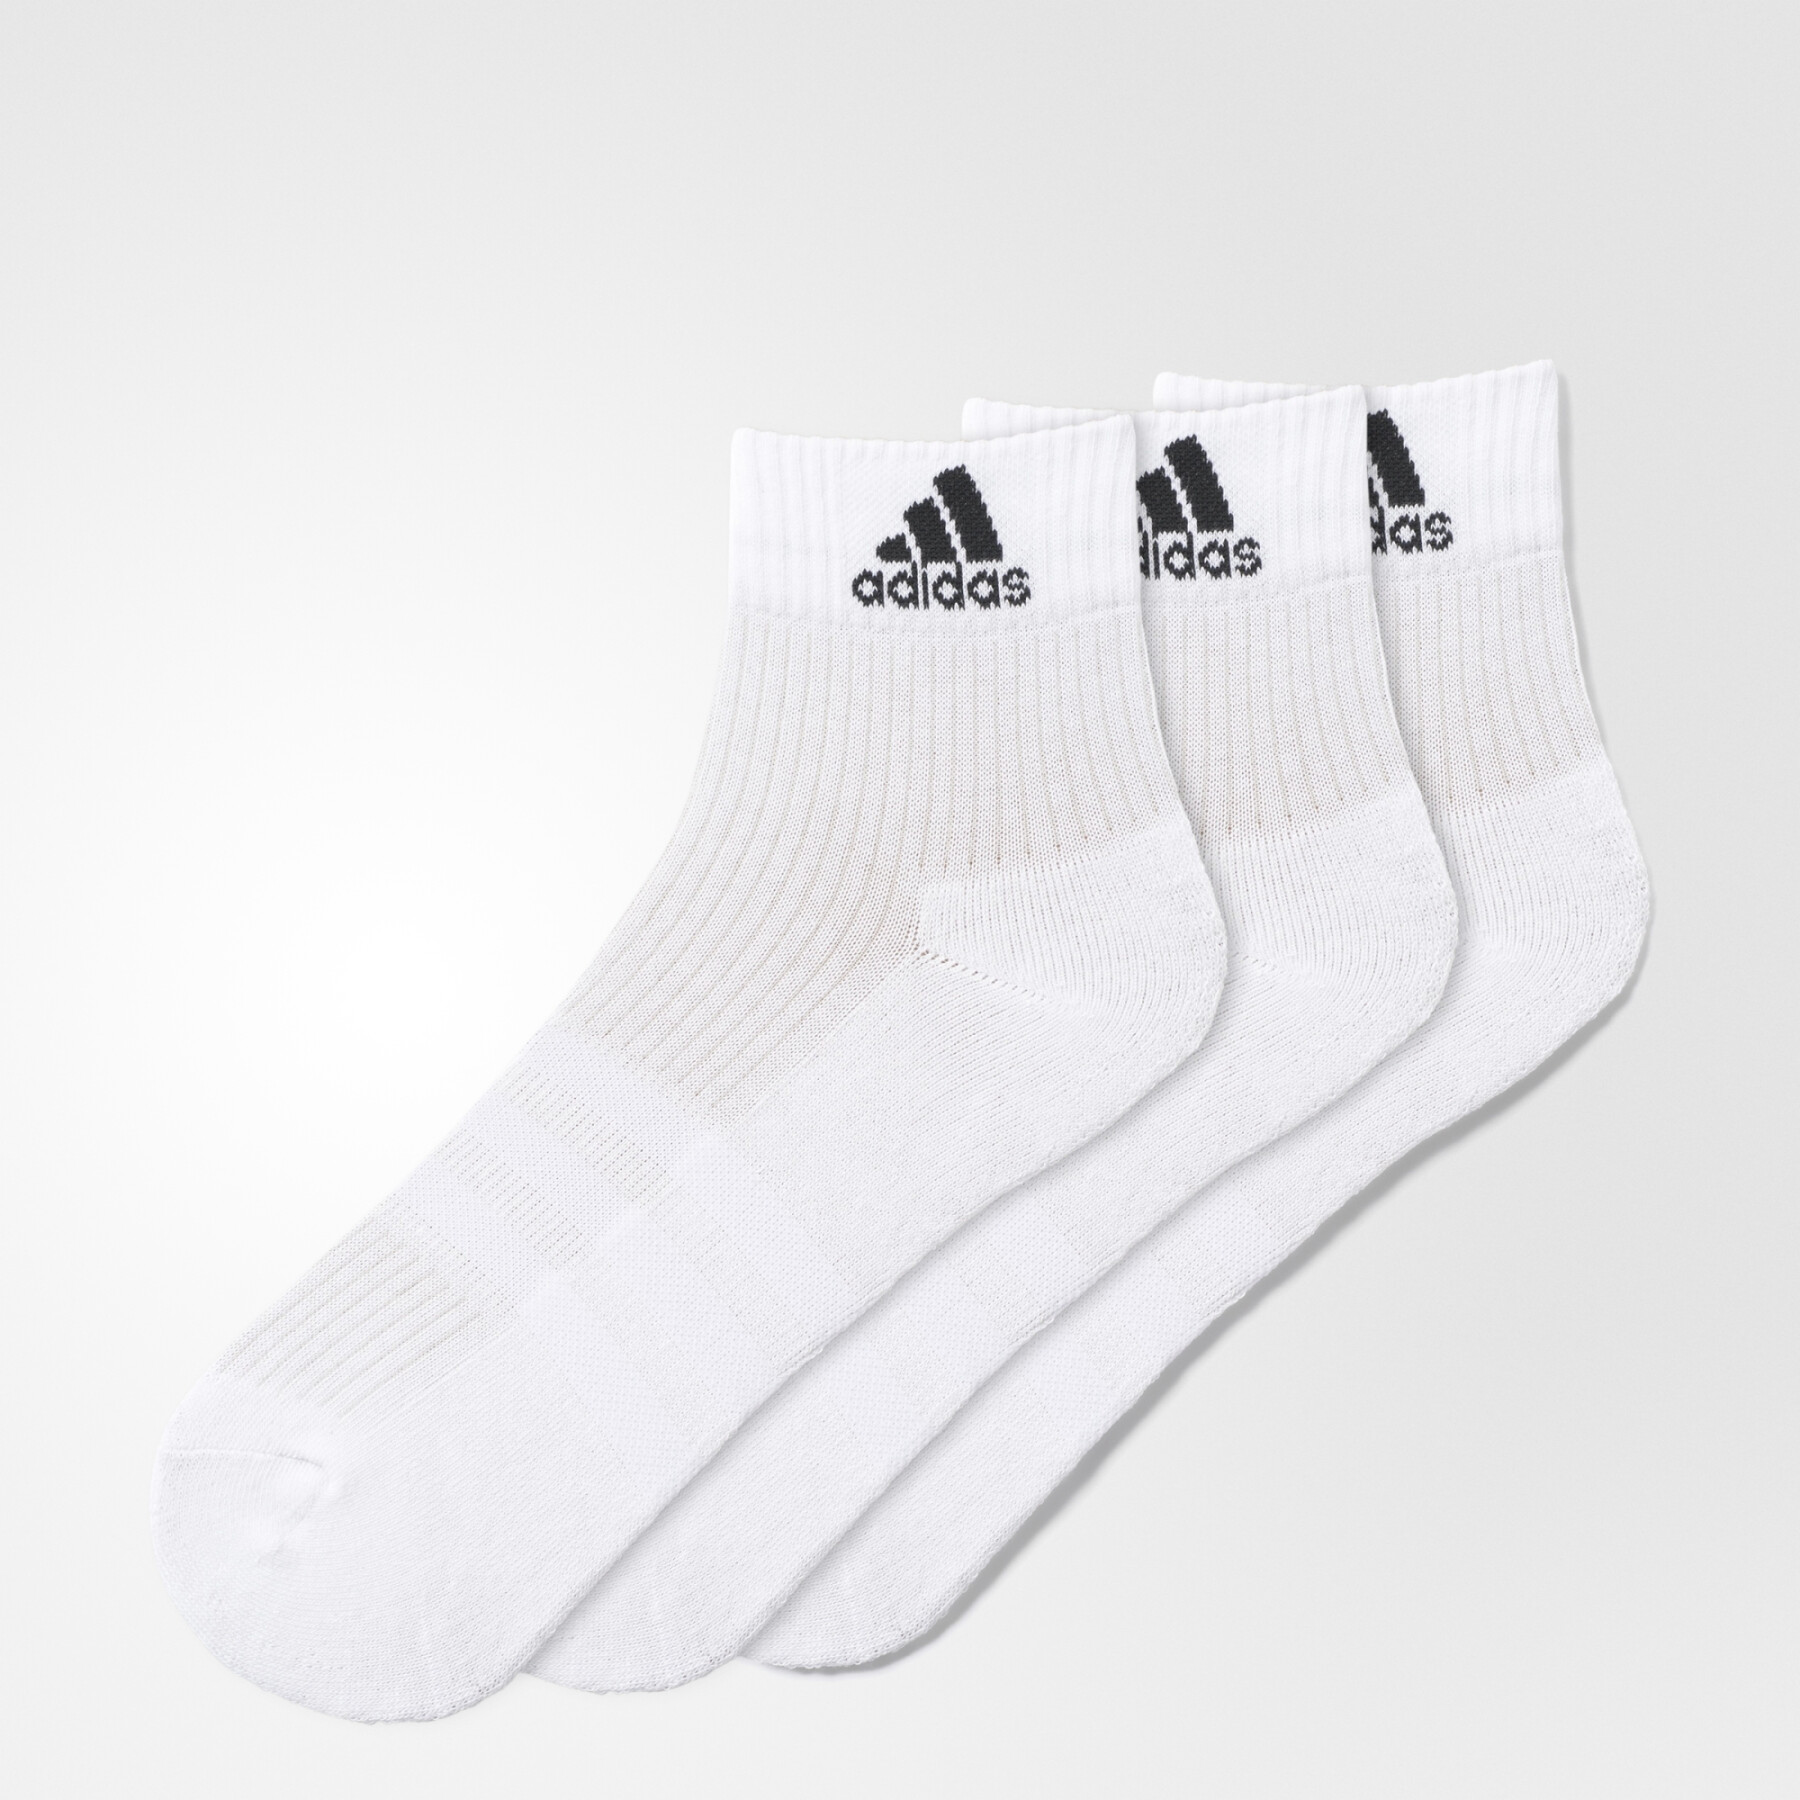 Socks adidas 3 bandes Performance (lot de 3 paires)